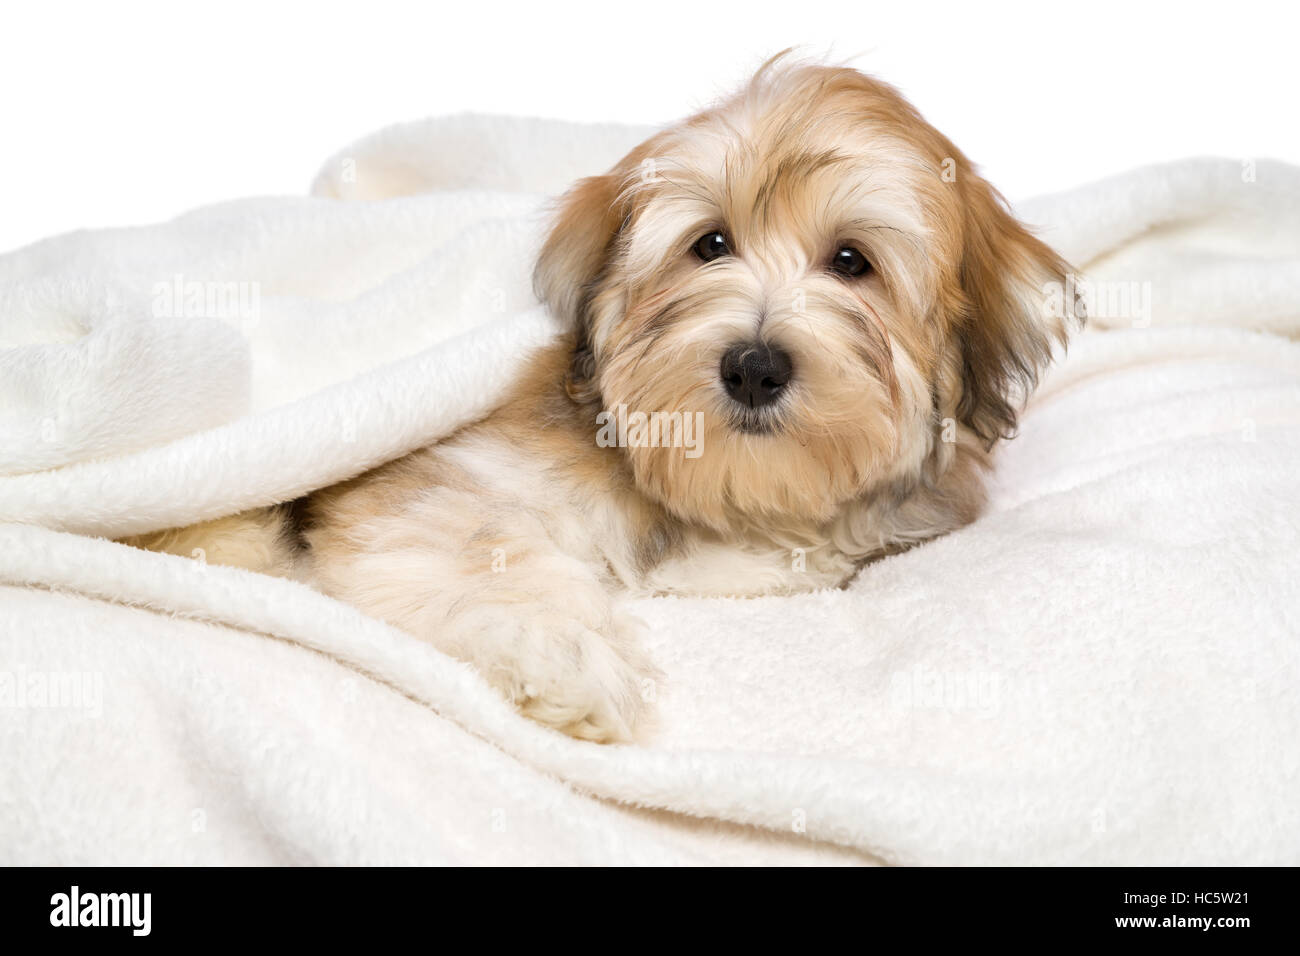 Cute reddish Bichon Havanese puppy dog is lying on a white bedspread Stock Photo